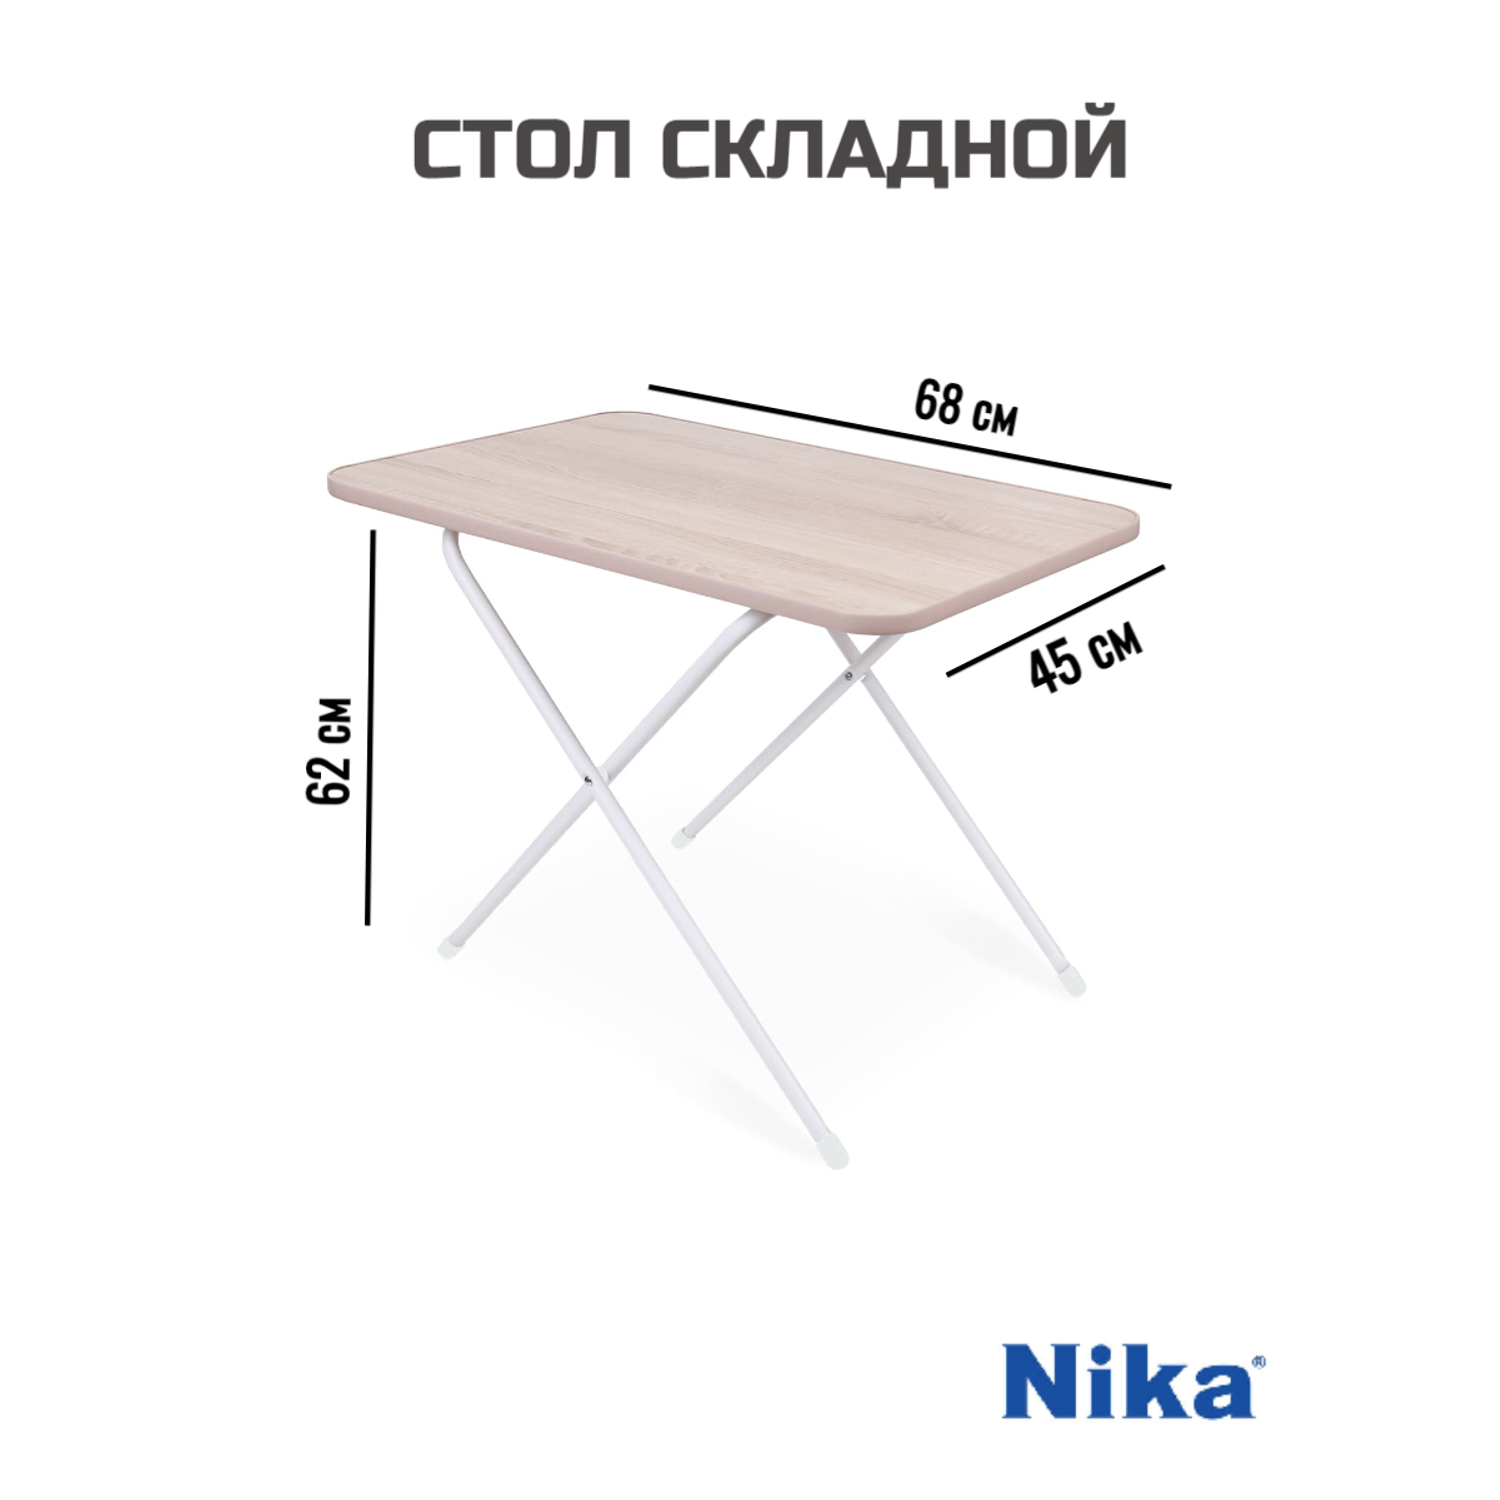 Стол складной Nika kids ТСТМ/С - фото 3